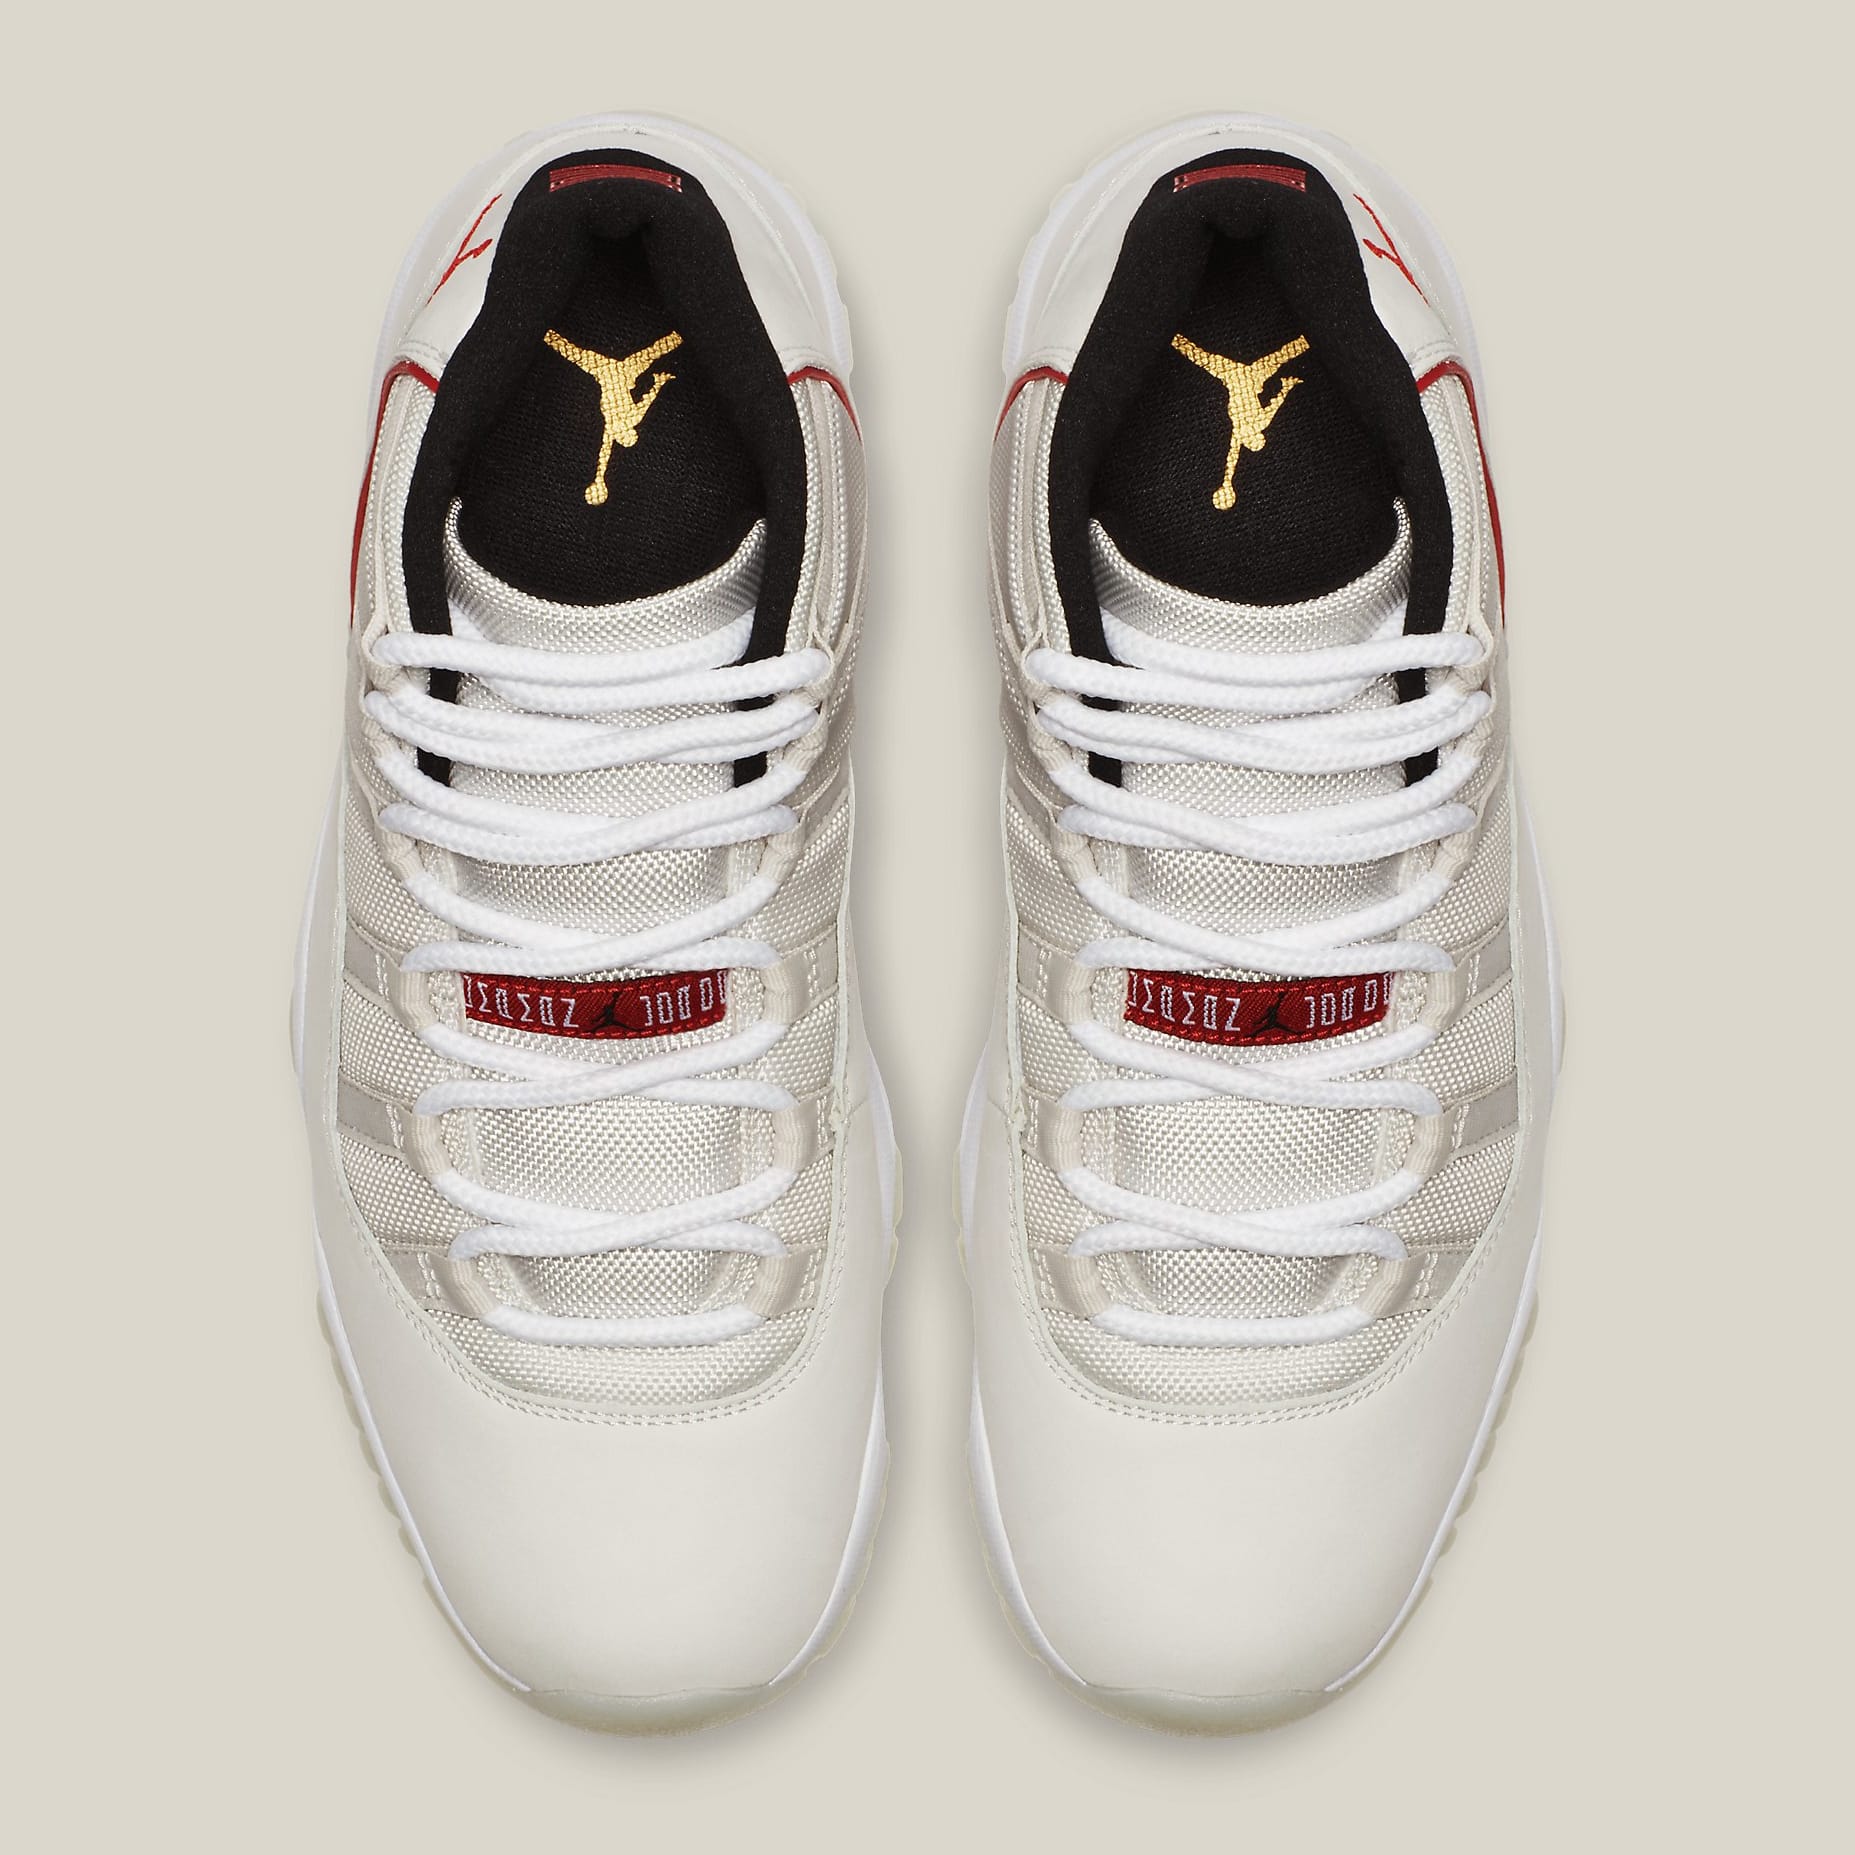 Air Jordan 11 XI Platinum Tint Release Date 378037-016 Top